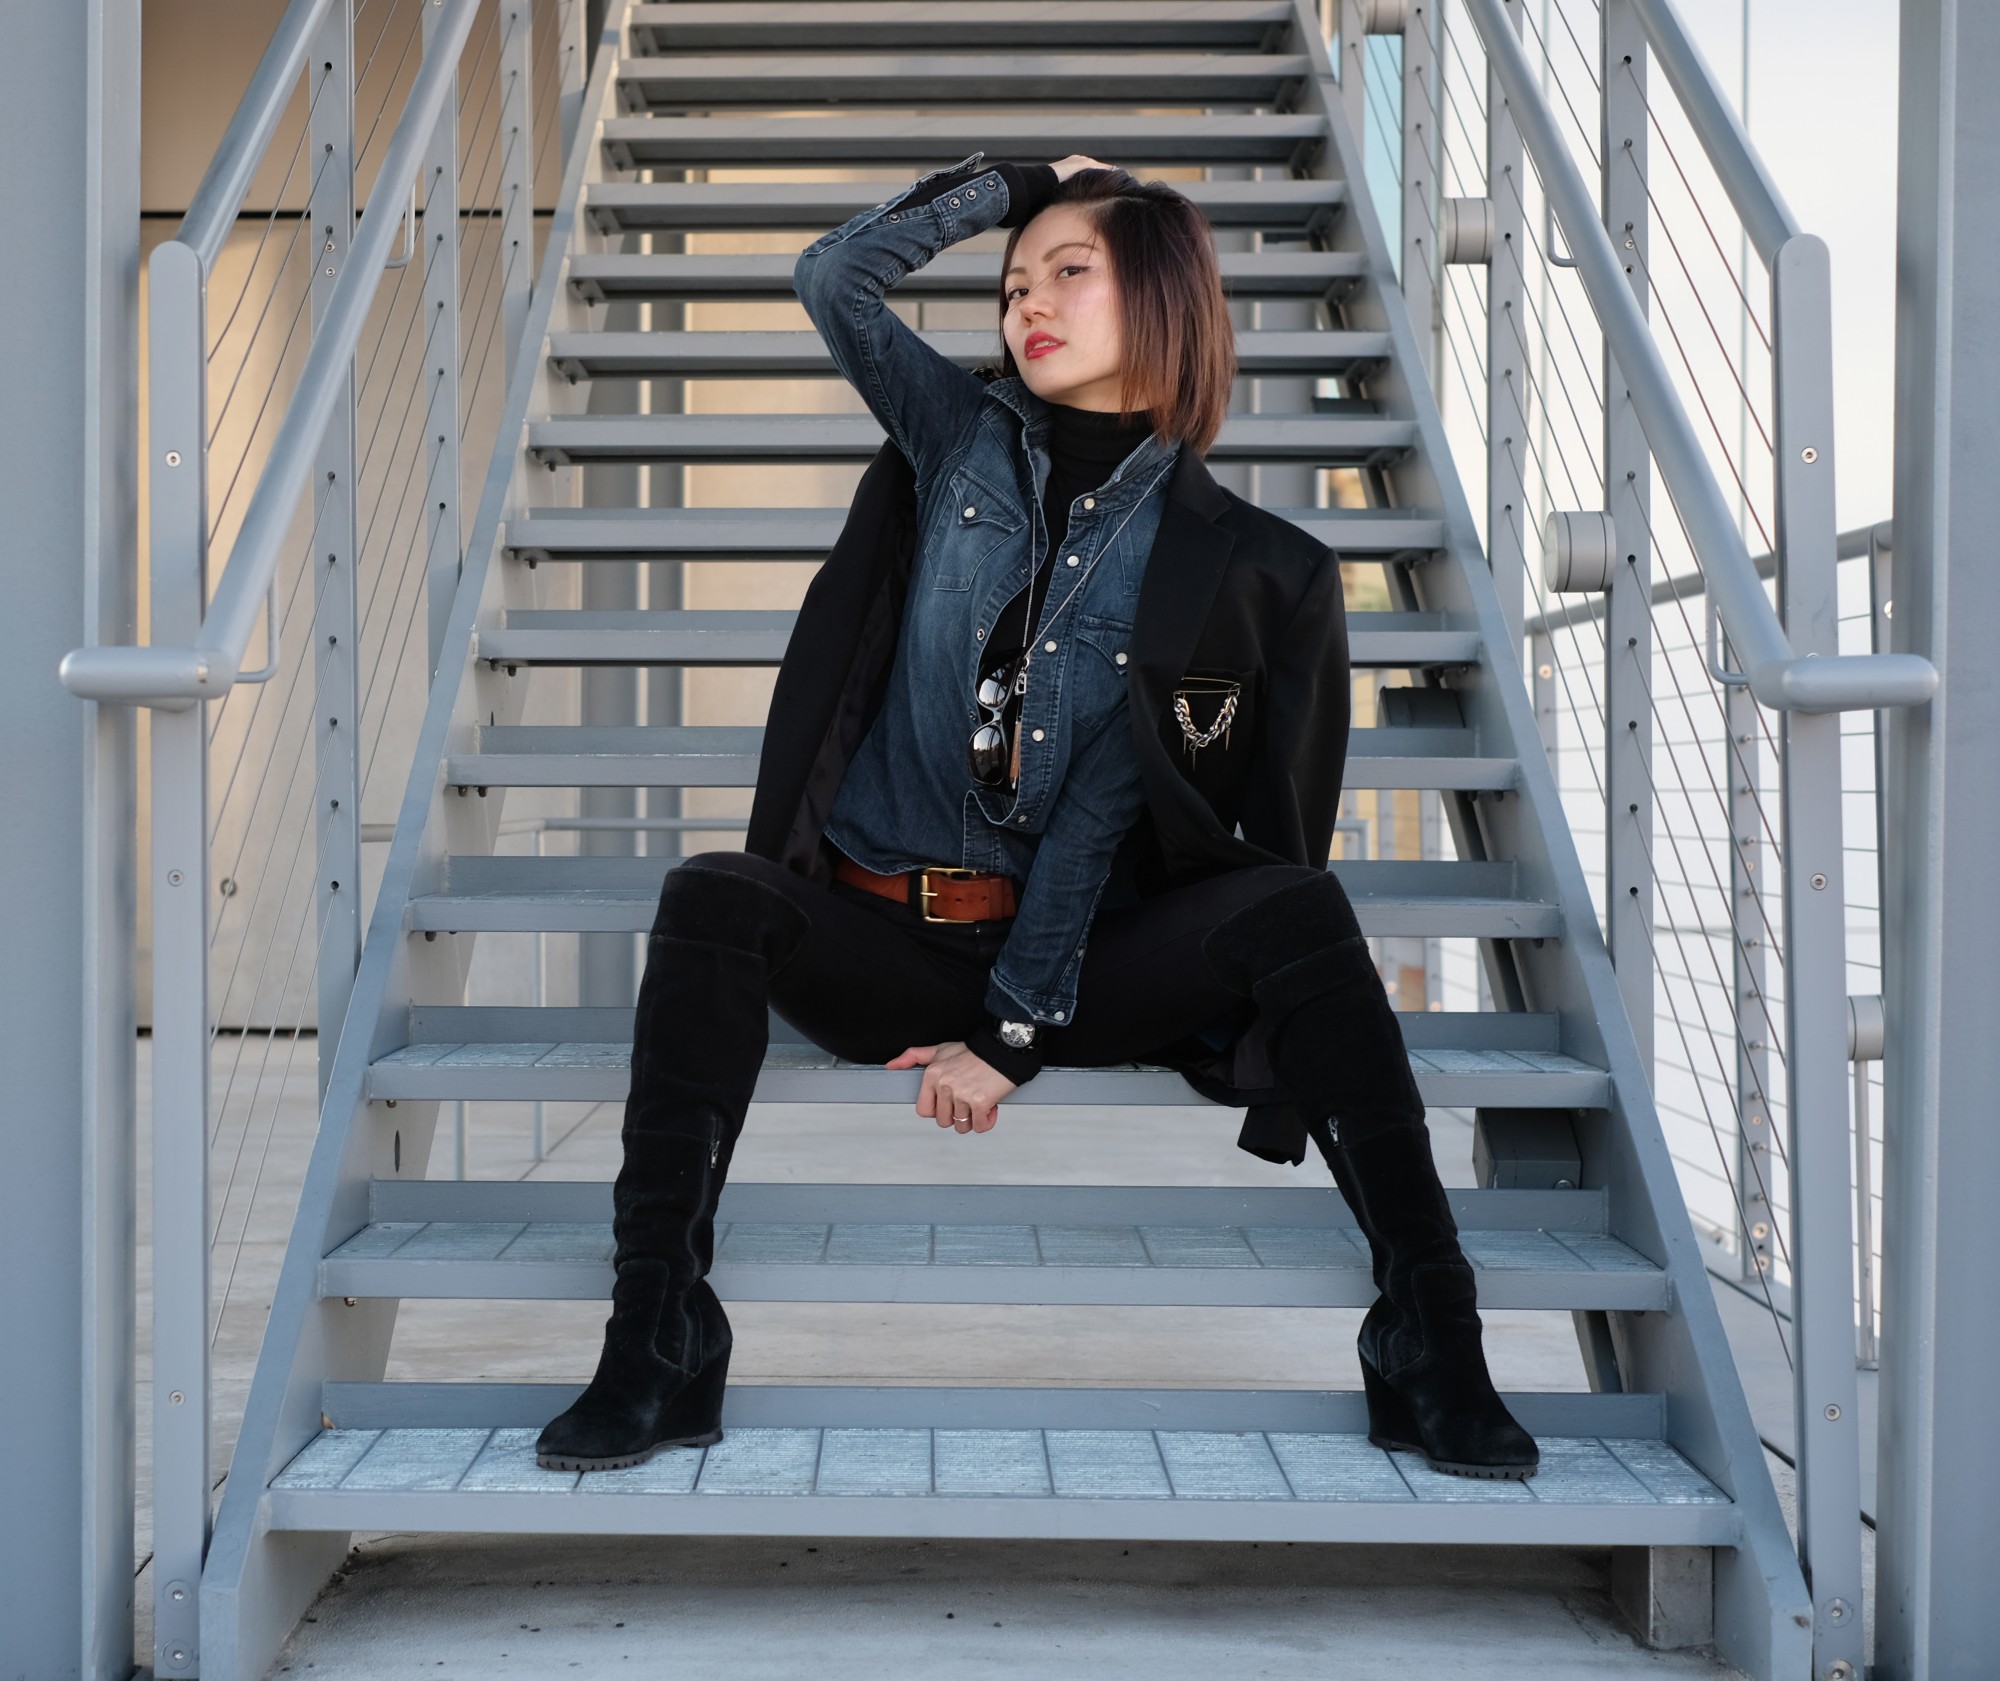 Asian girl sitting on metal stairs